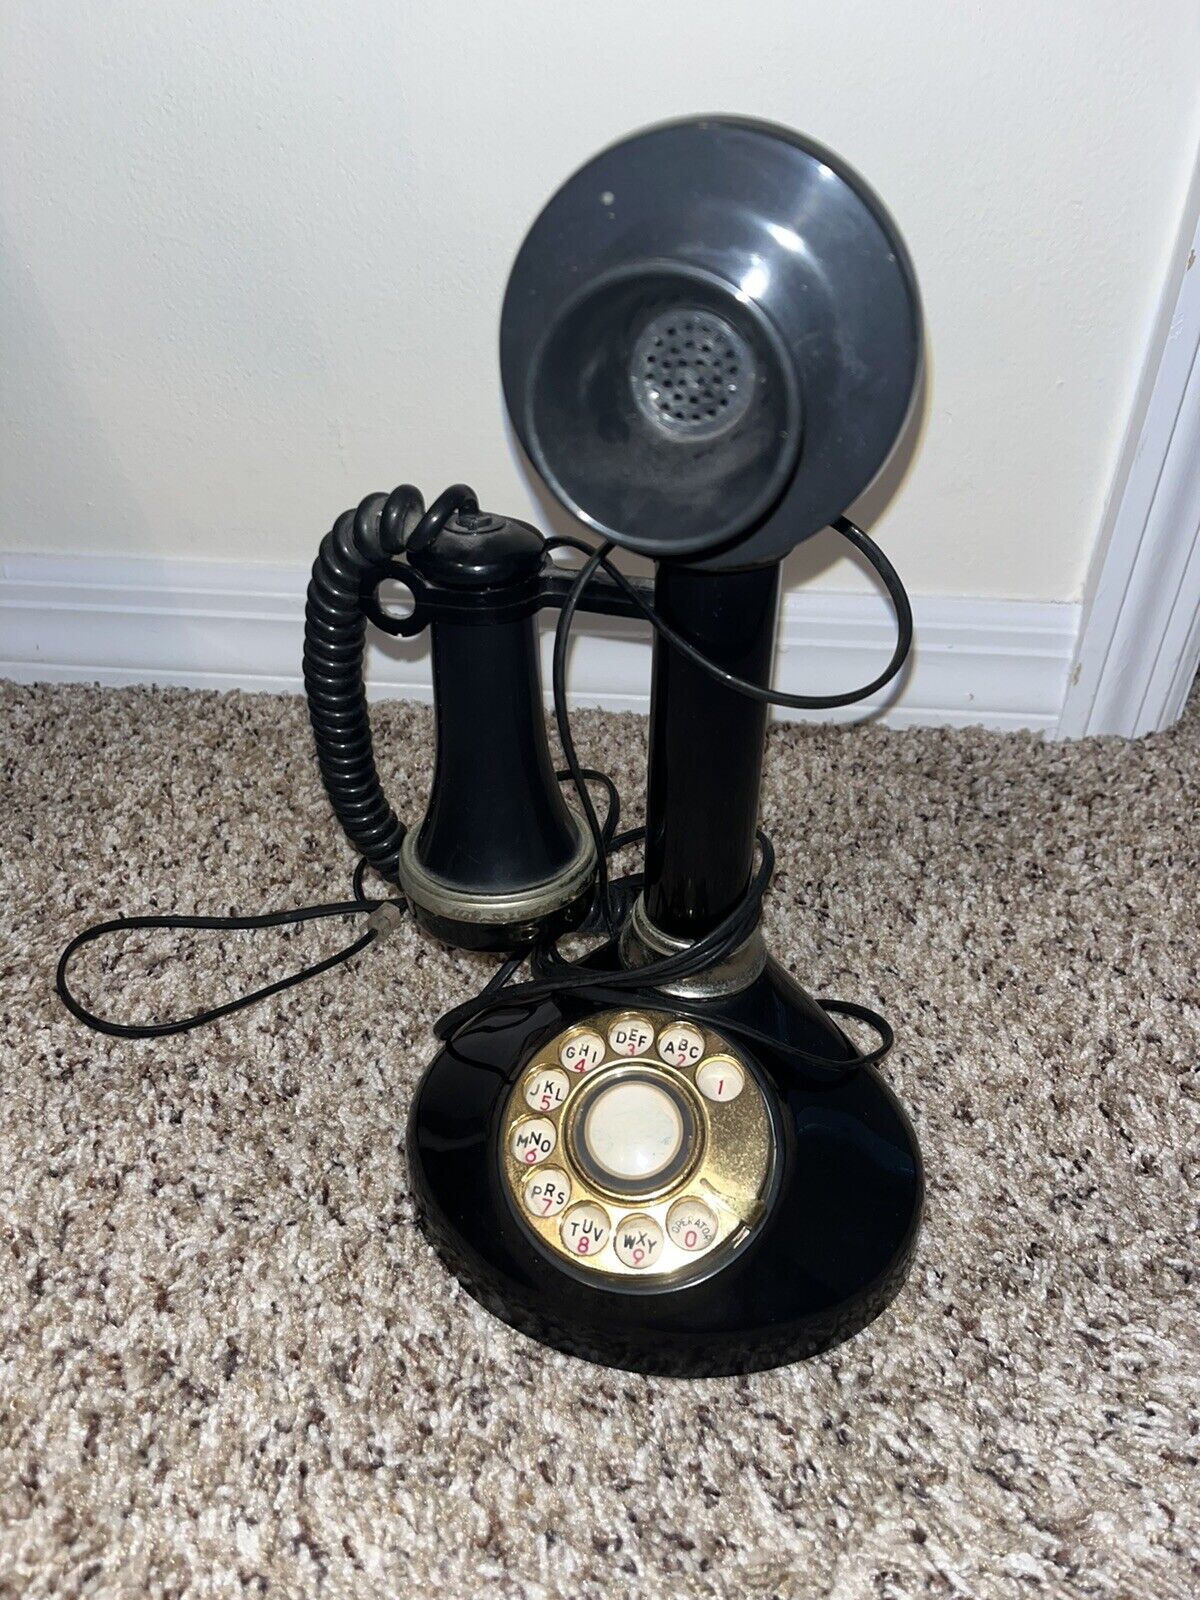 1973 Vintage Deco-Tel Candlestick Rotary Telephone Black w/ Gold Trim Dial Tone